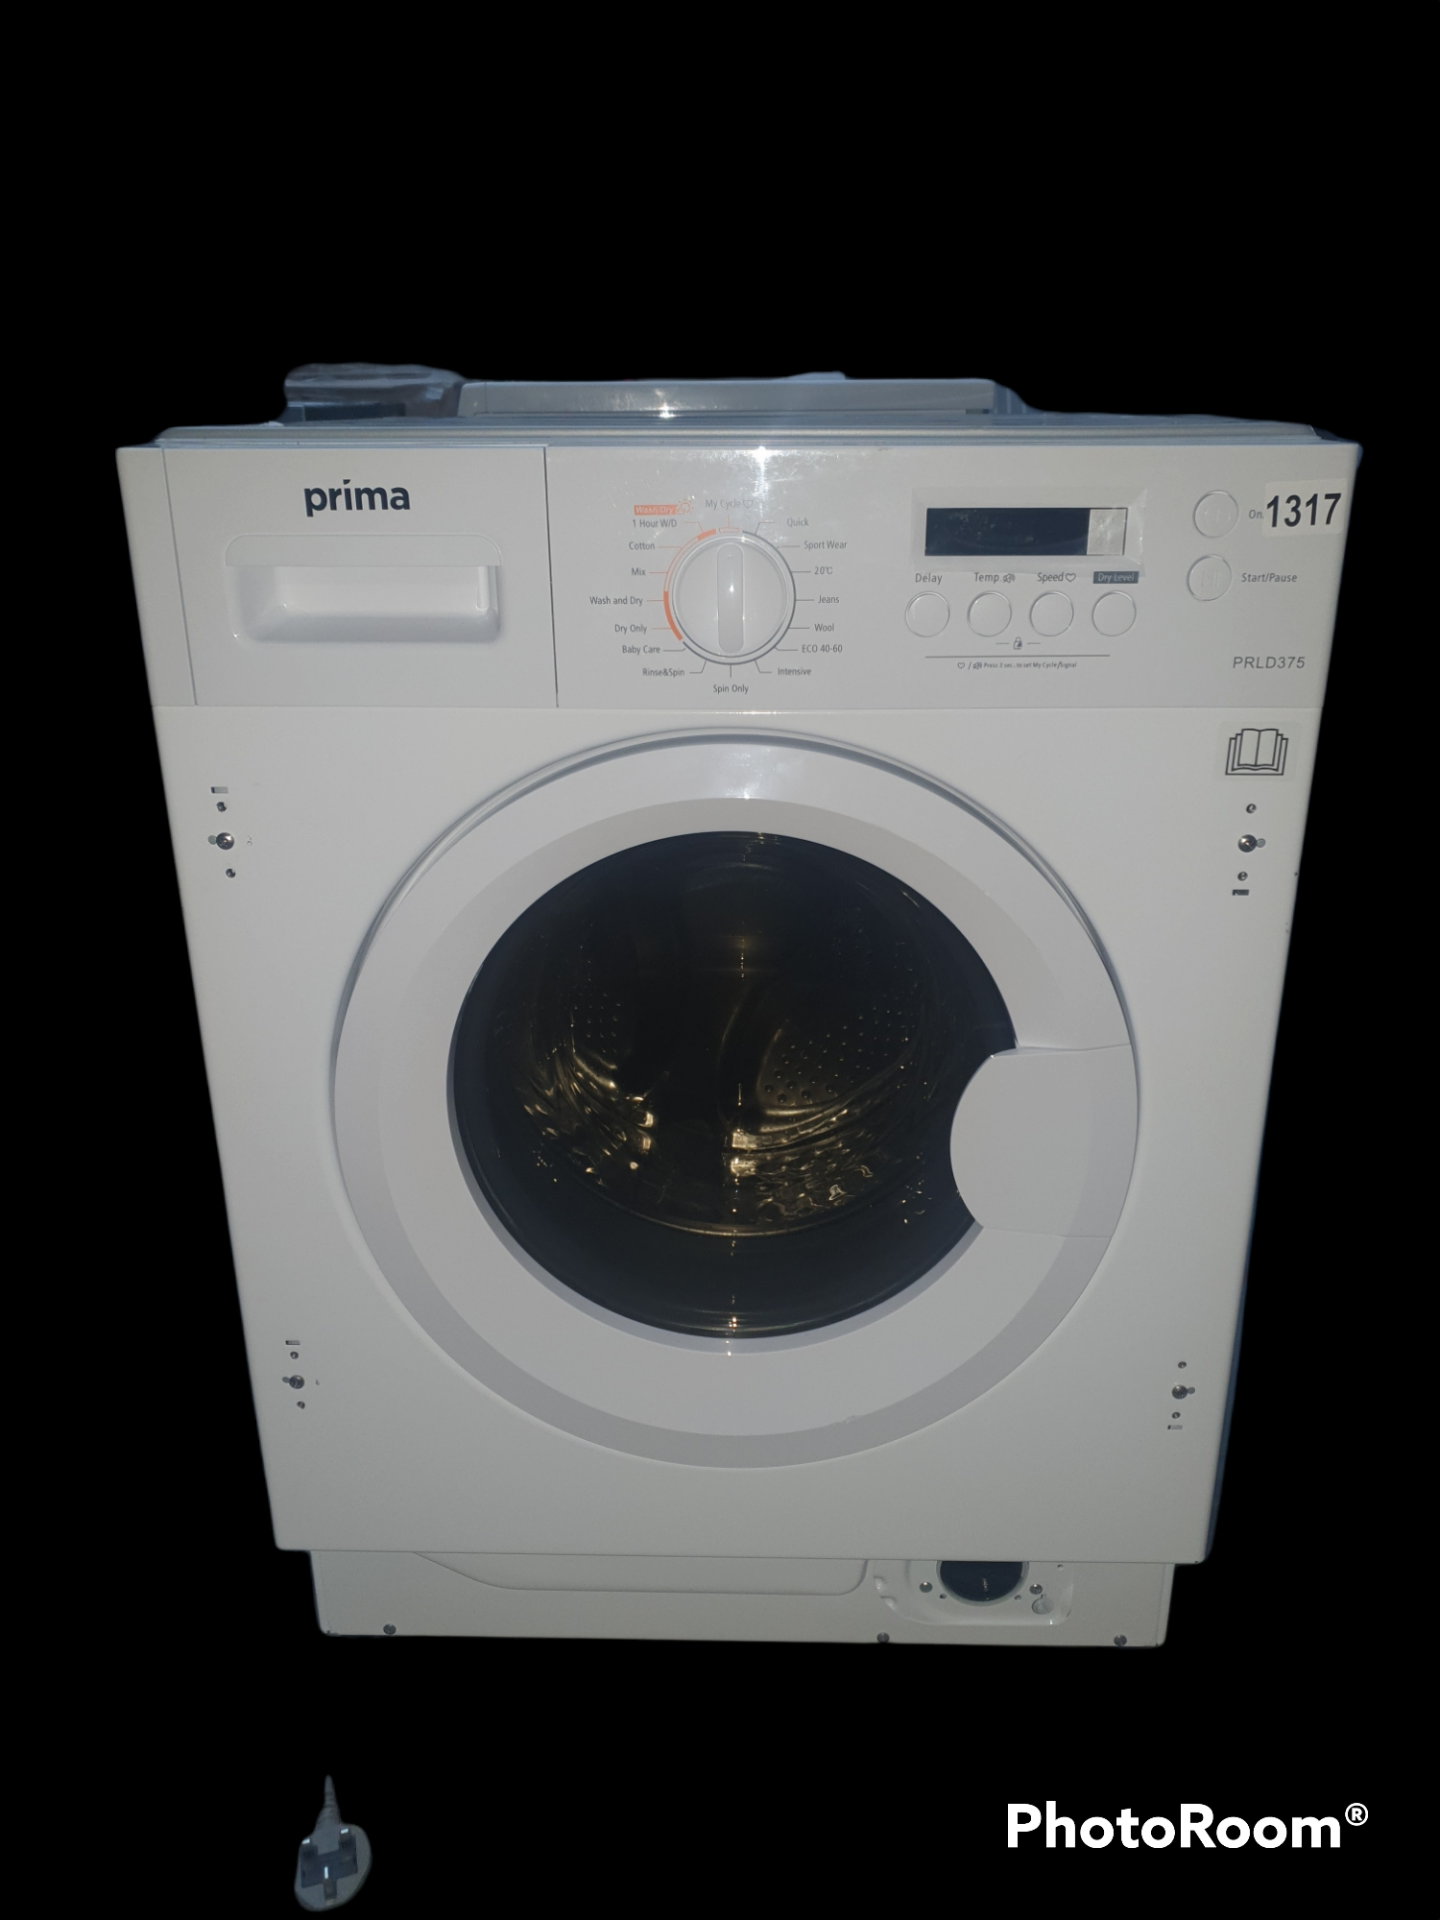 Prima 8Kg Fully Integrated Washer Dryer PRLD375 White £520